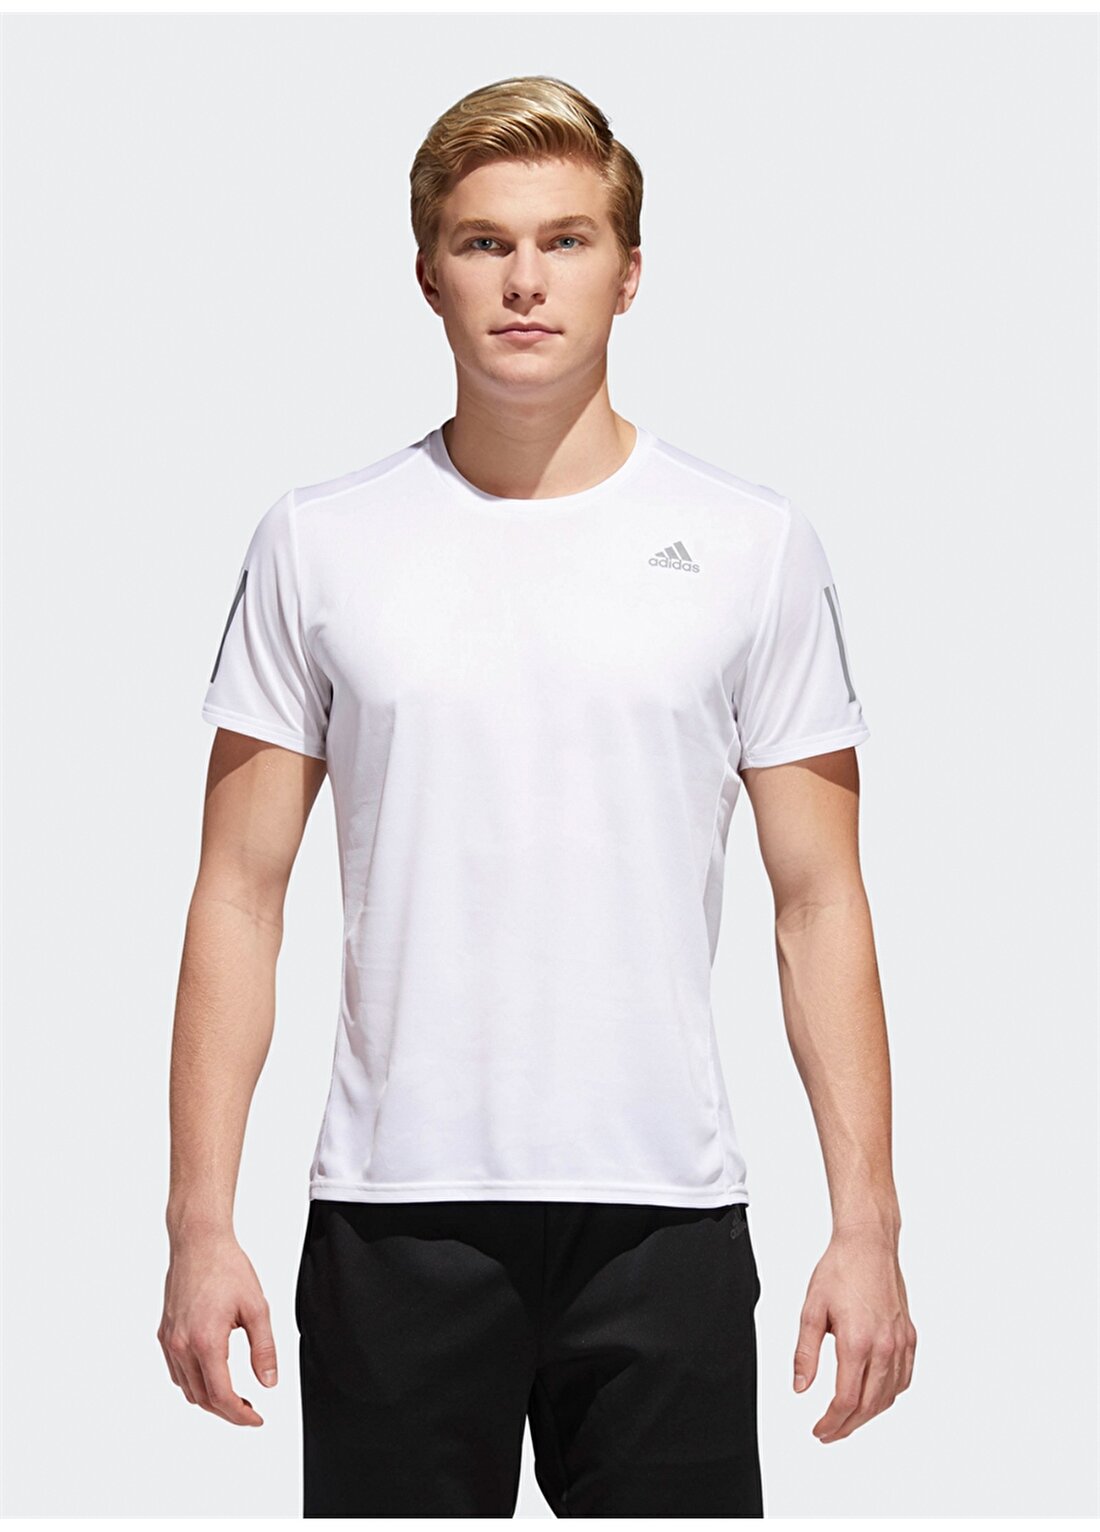 Adidas Response T-Shirt